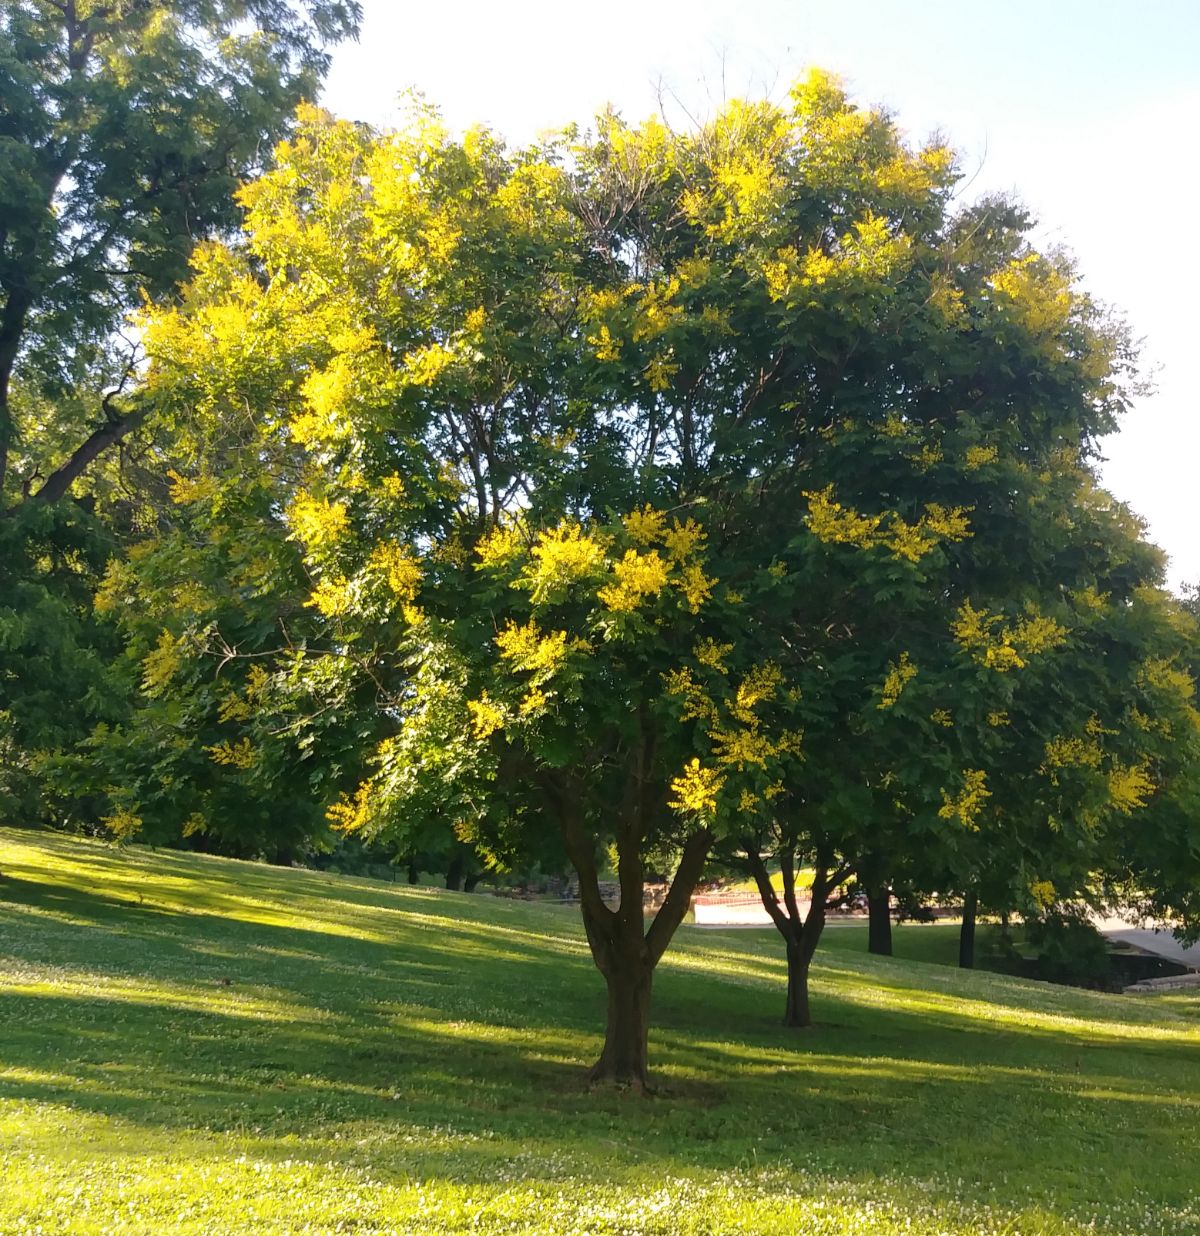 Golden rain tree in a park